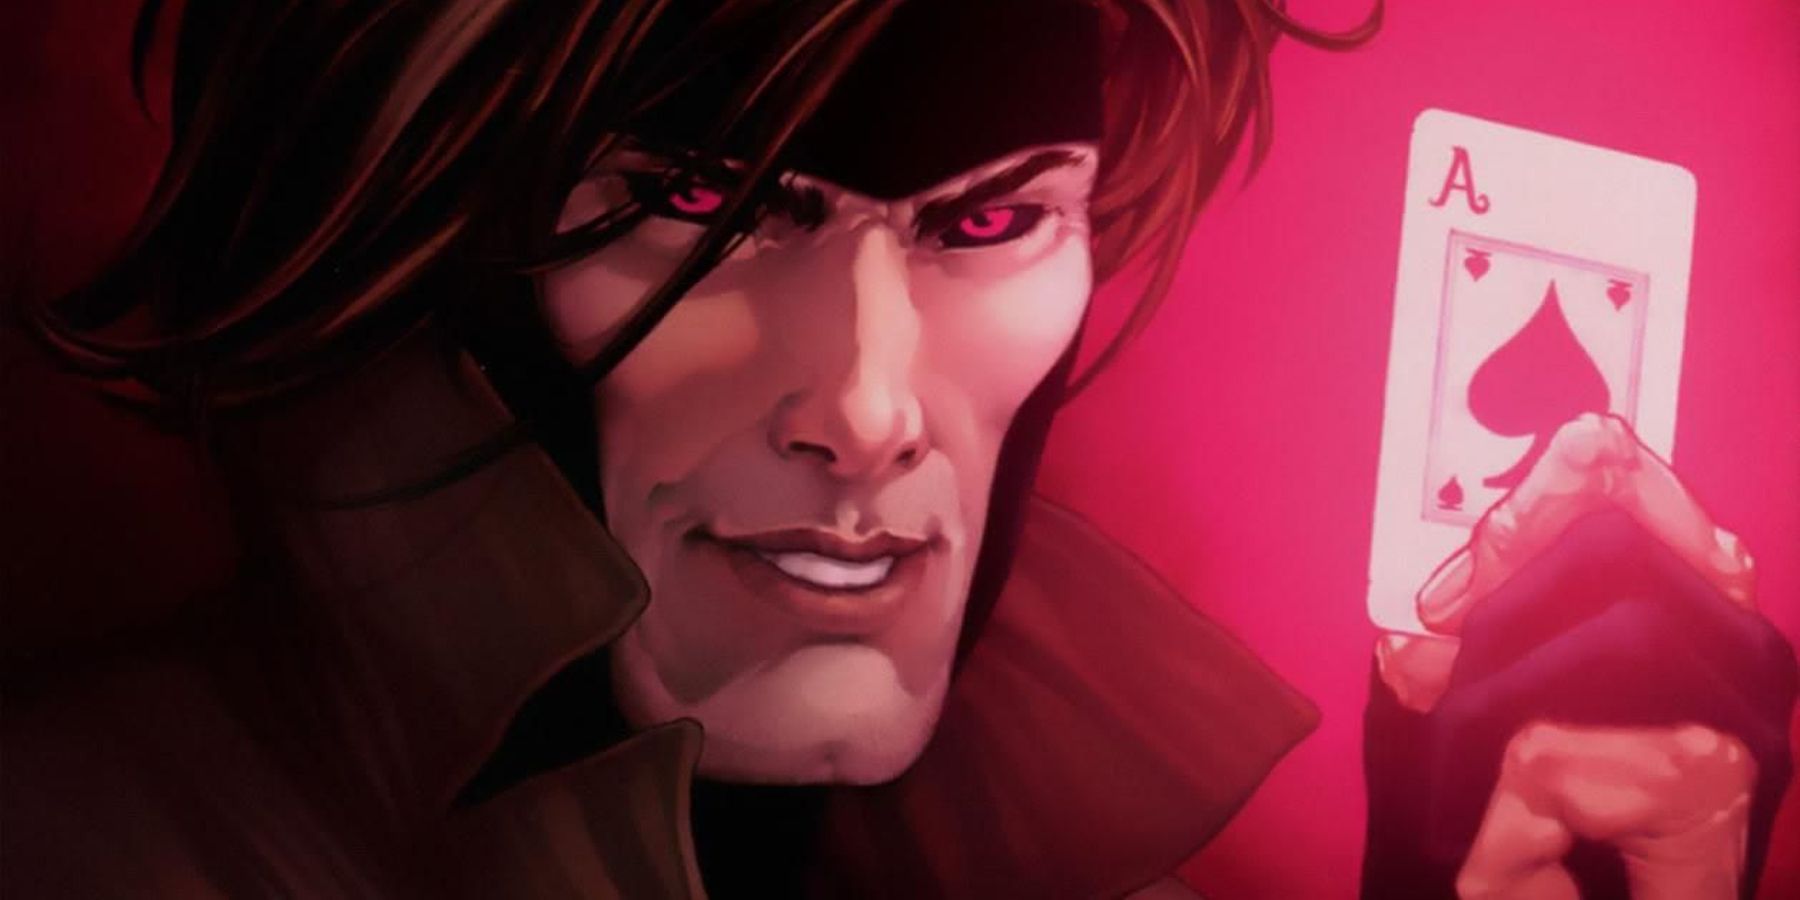 Gambit wielding an ace in his hand in Marvel comics artwork